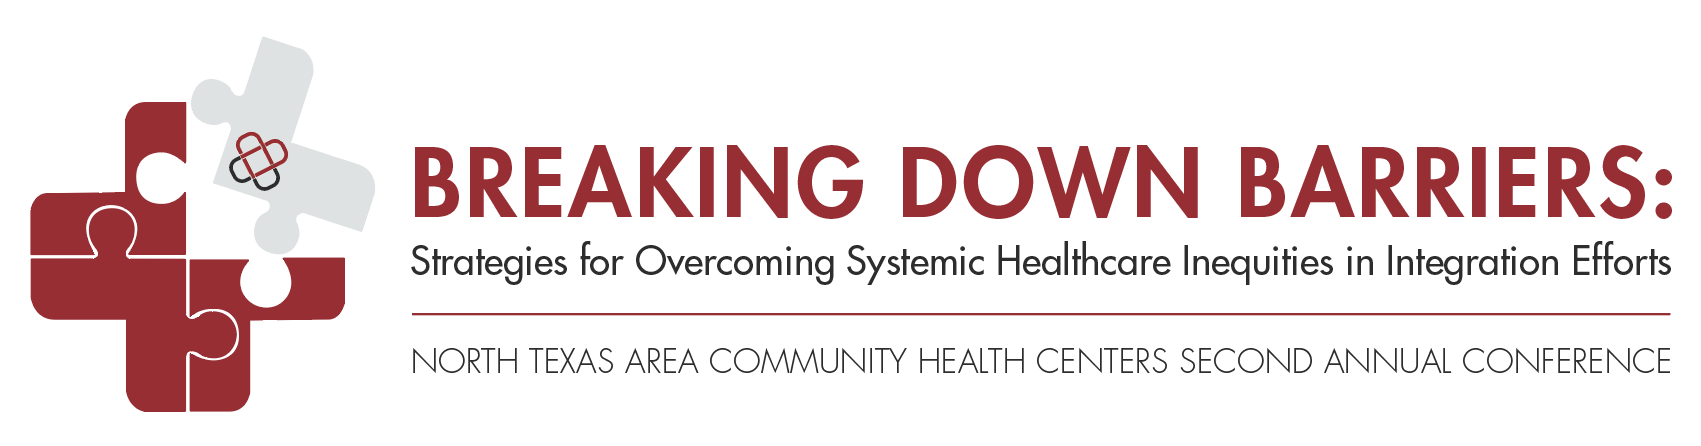 Breaking Down Barriers logo red